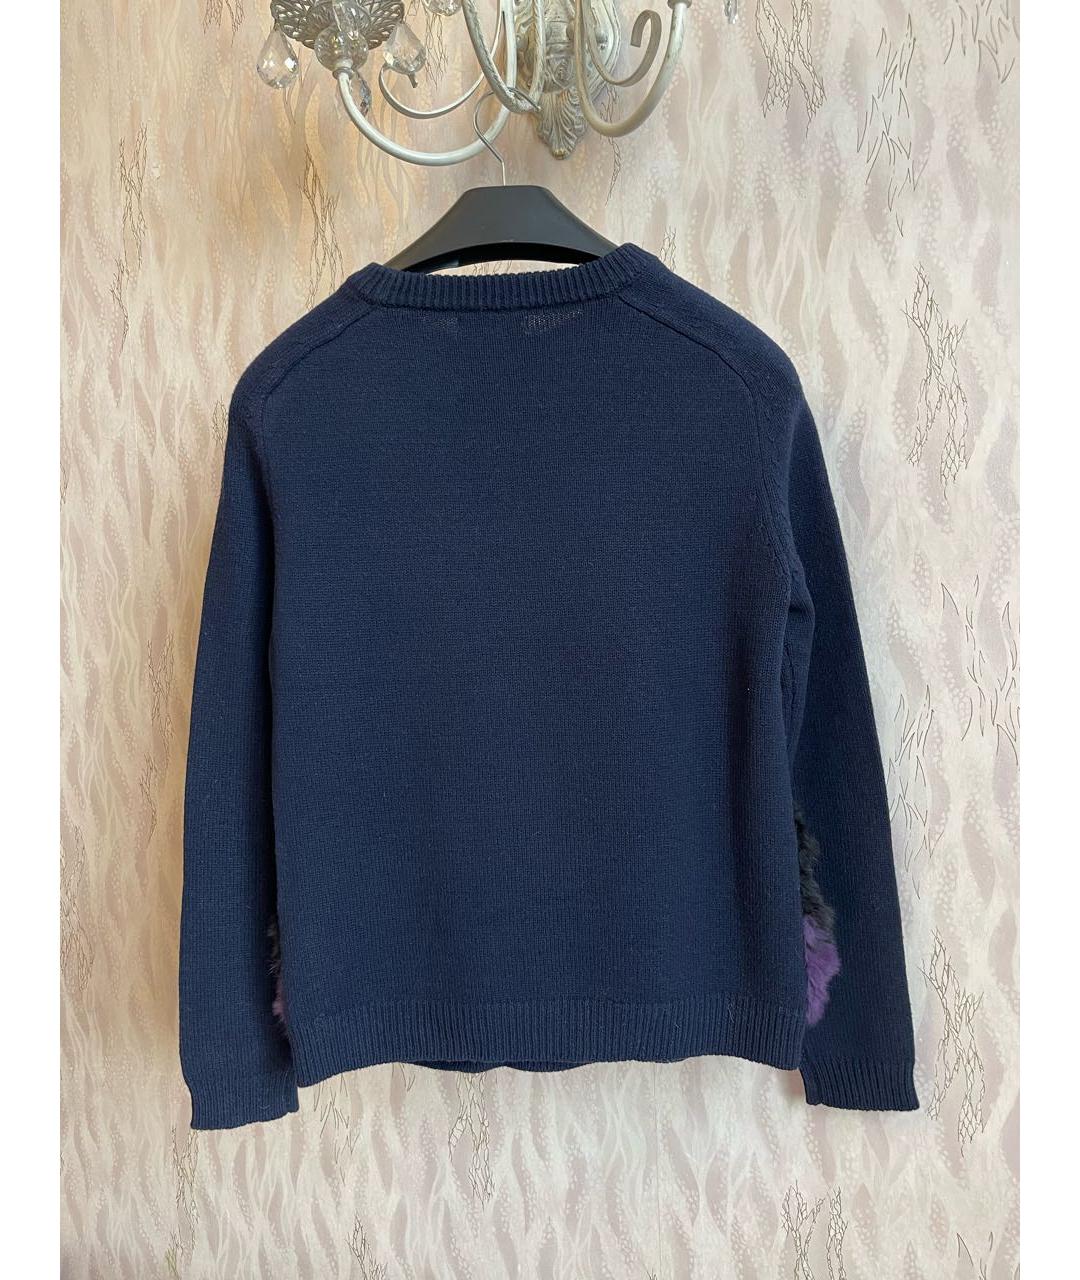 OPENING CEREMONY Темно-синий шерстяной джемпер / свитер, фото 2